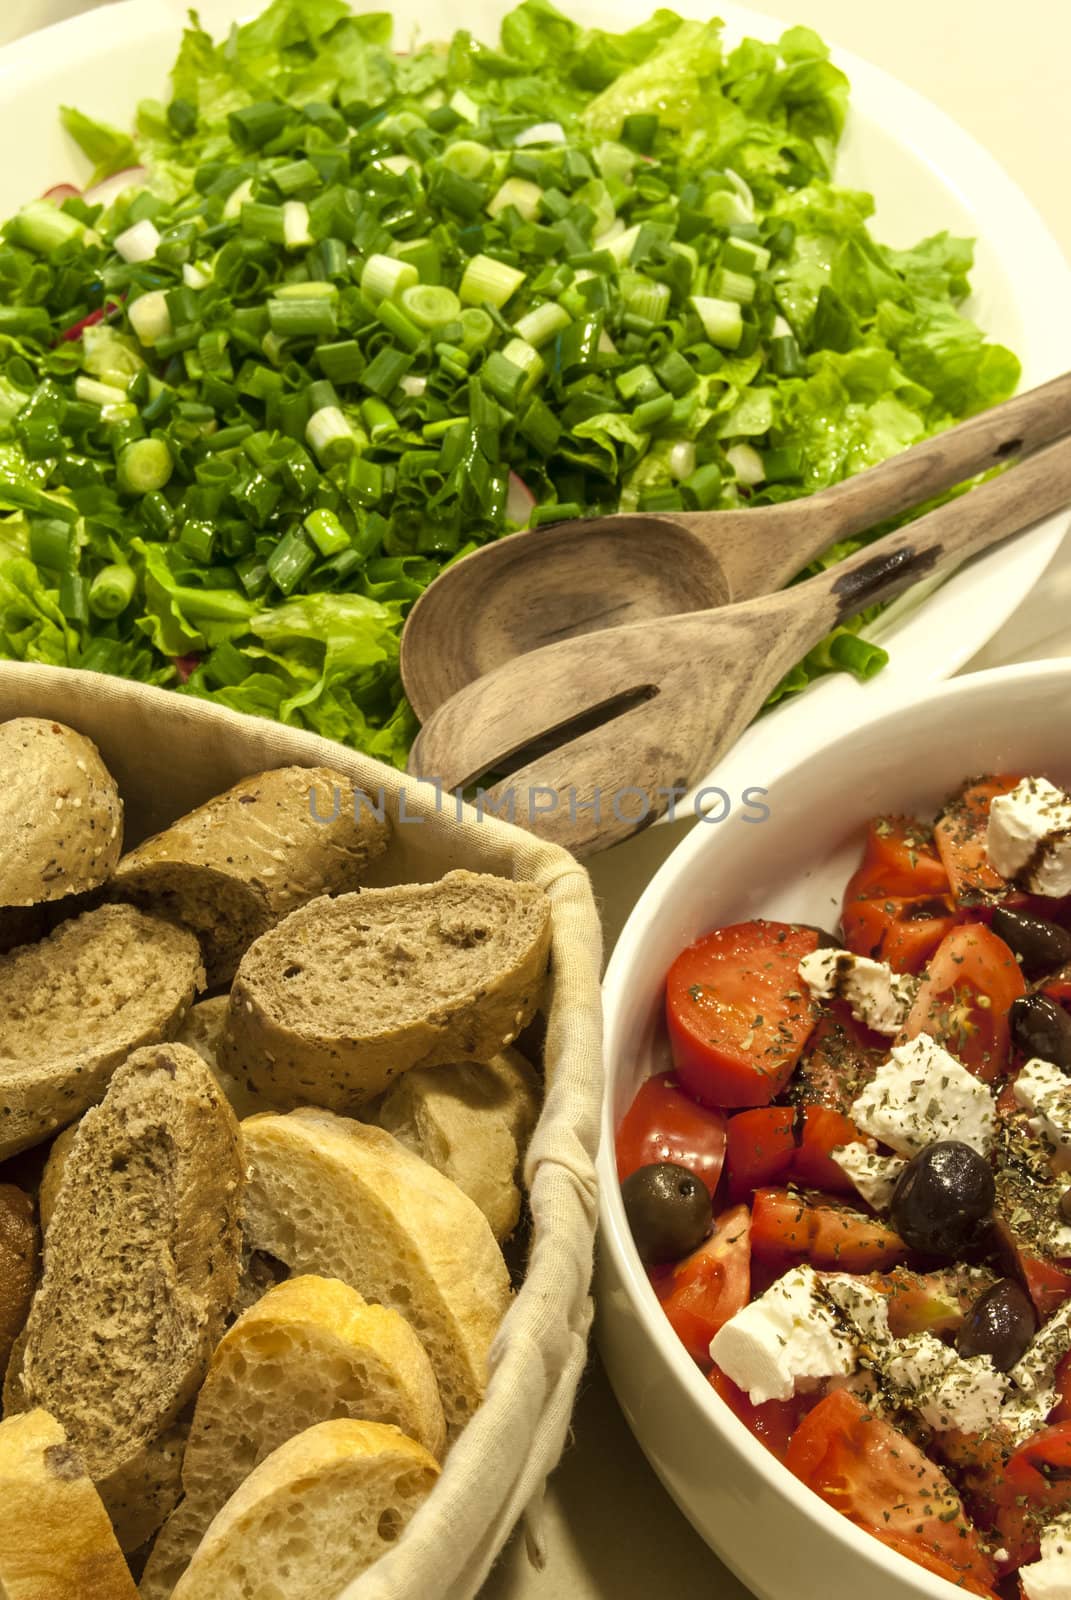 Green salad, tomatoes, bread by varbenov